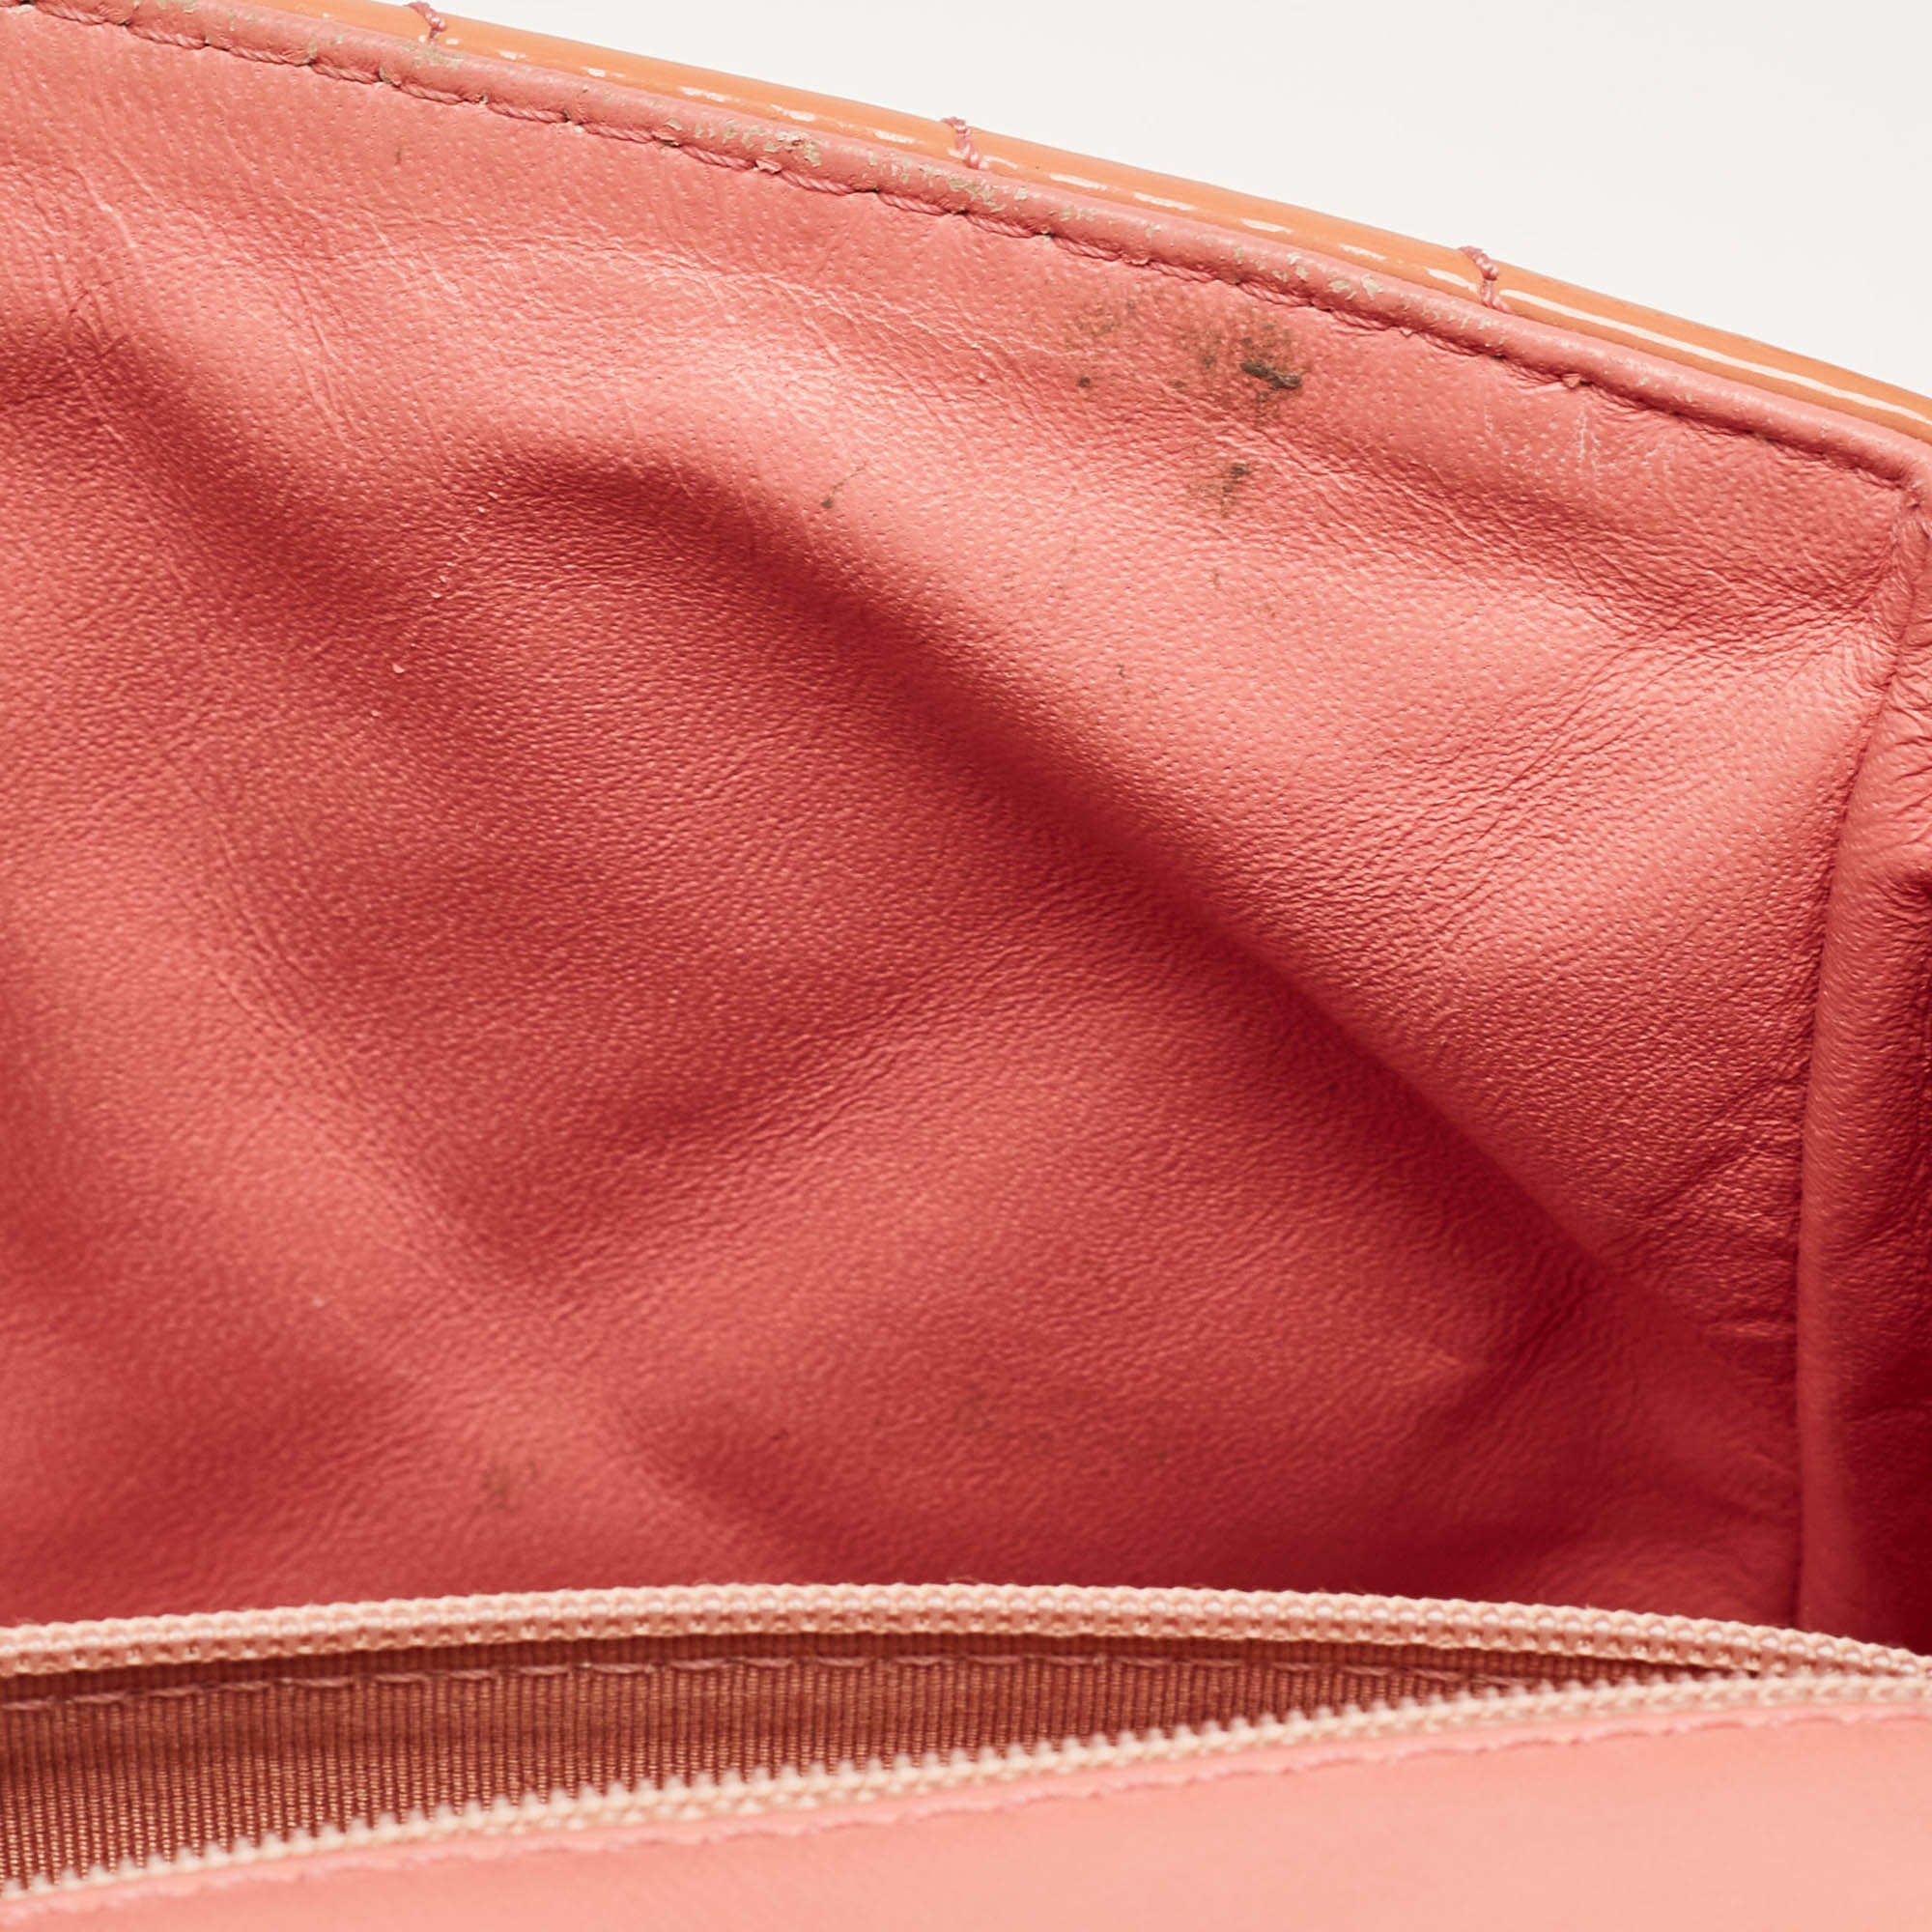 Chanel Pink Chevron Patent Leather Jumbo Classic Single Flap Bag